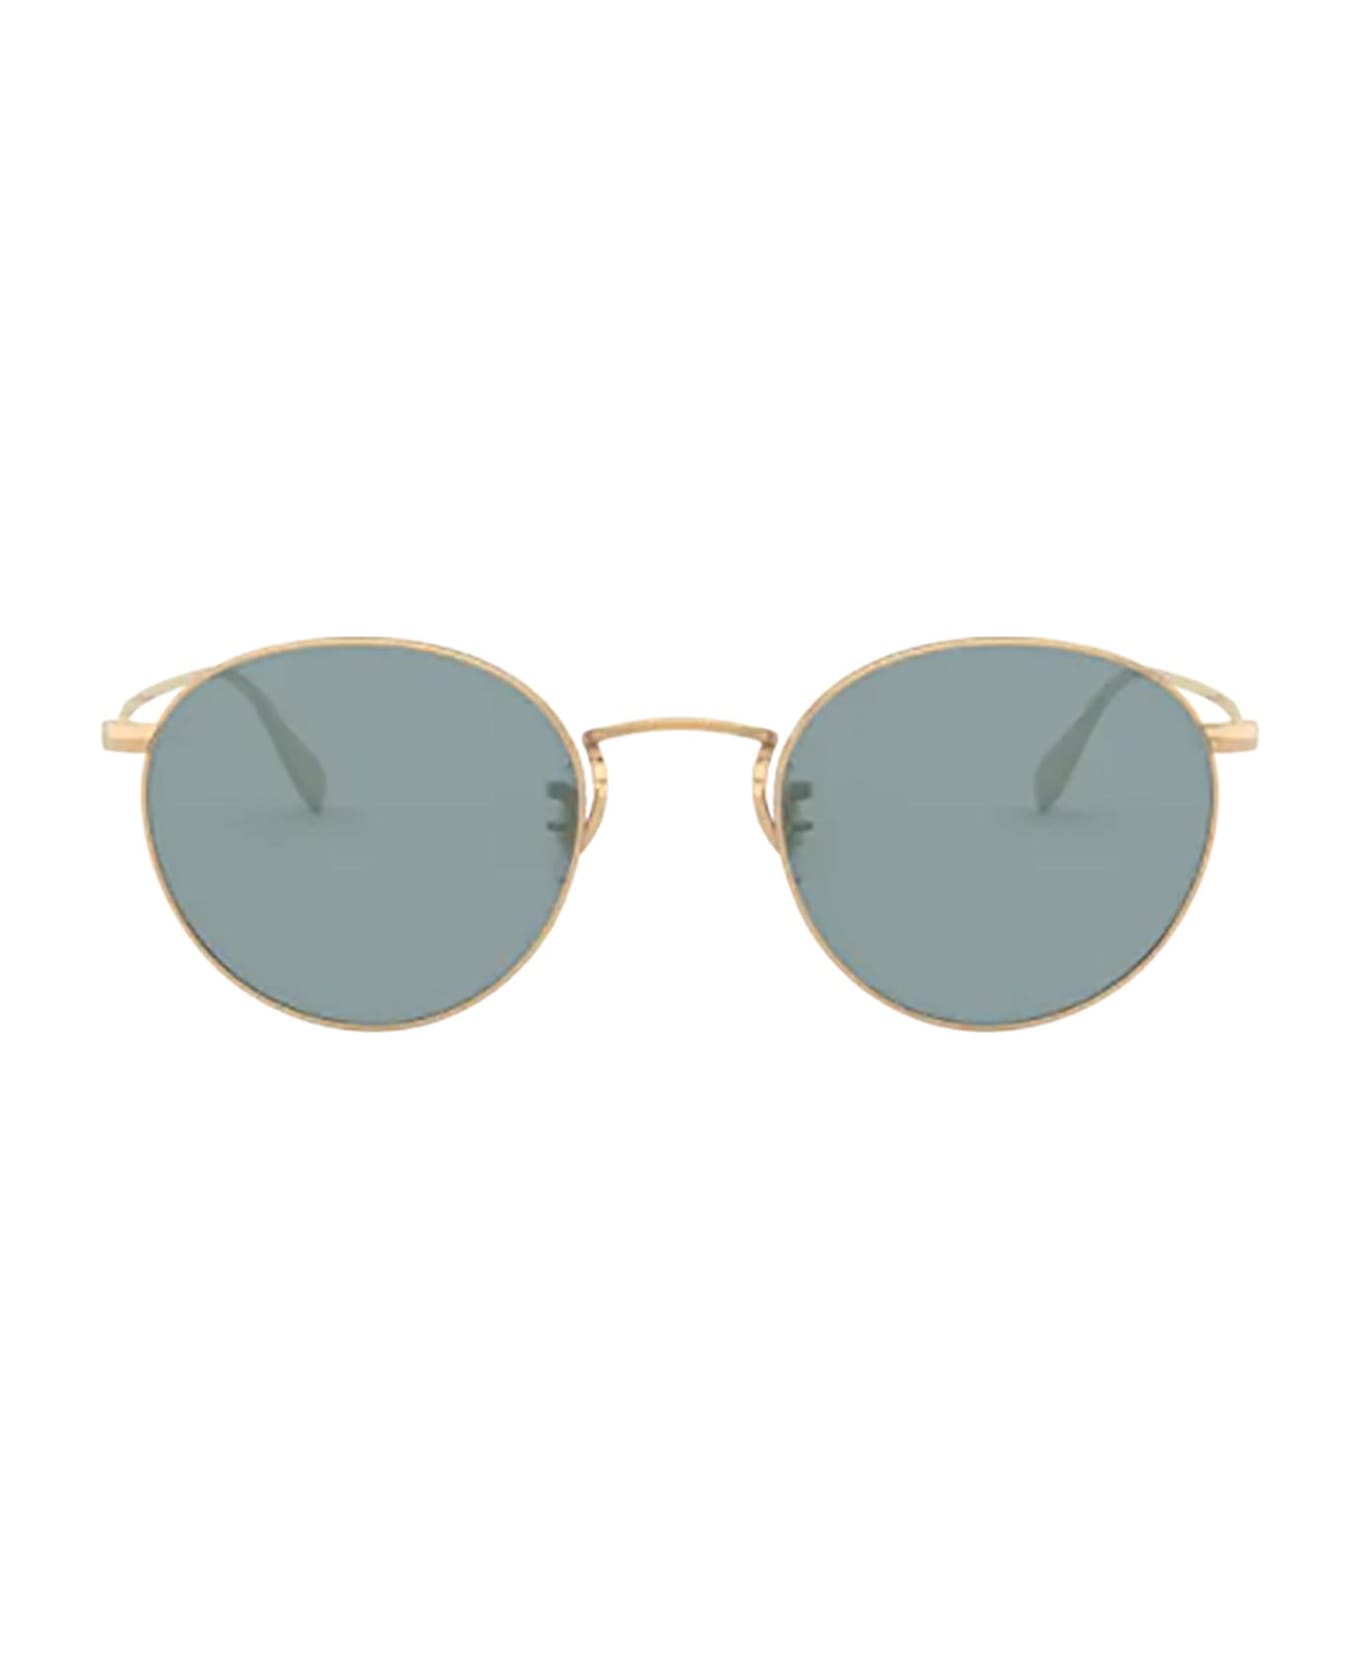 Oliver Peoples Ov1186s Gold Sunglasses - Gold